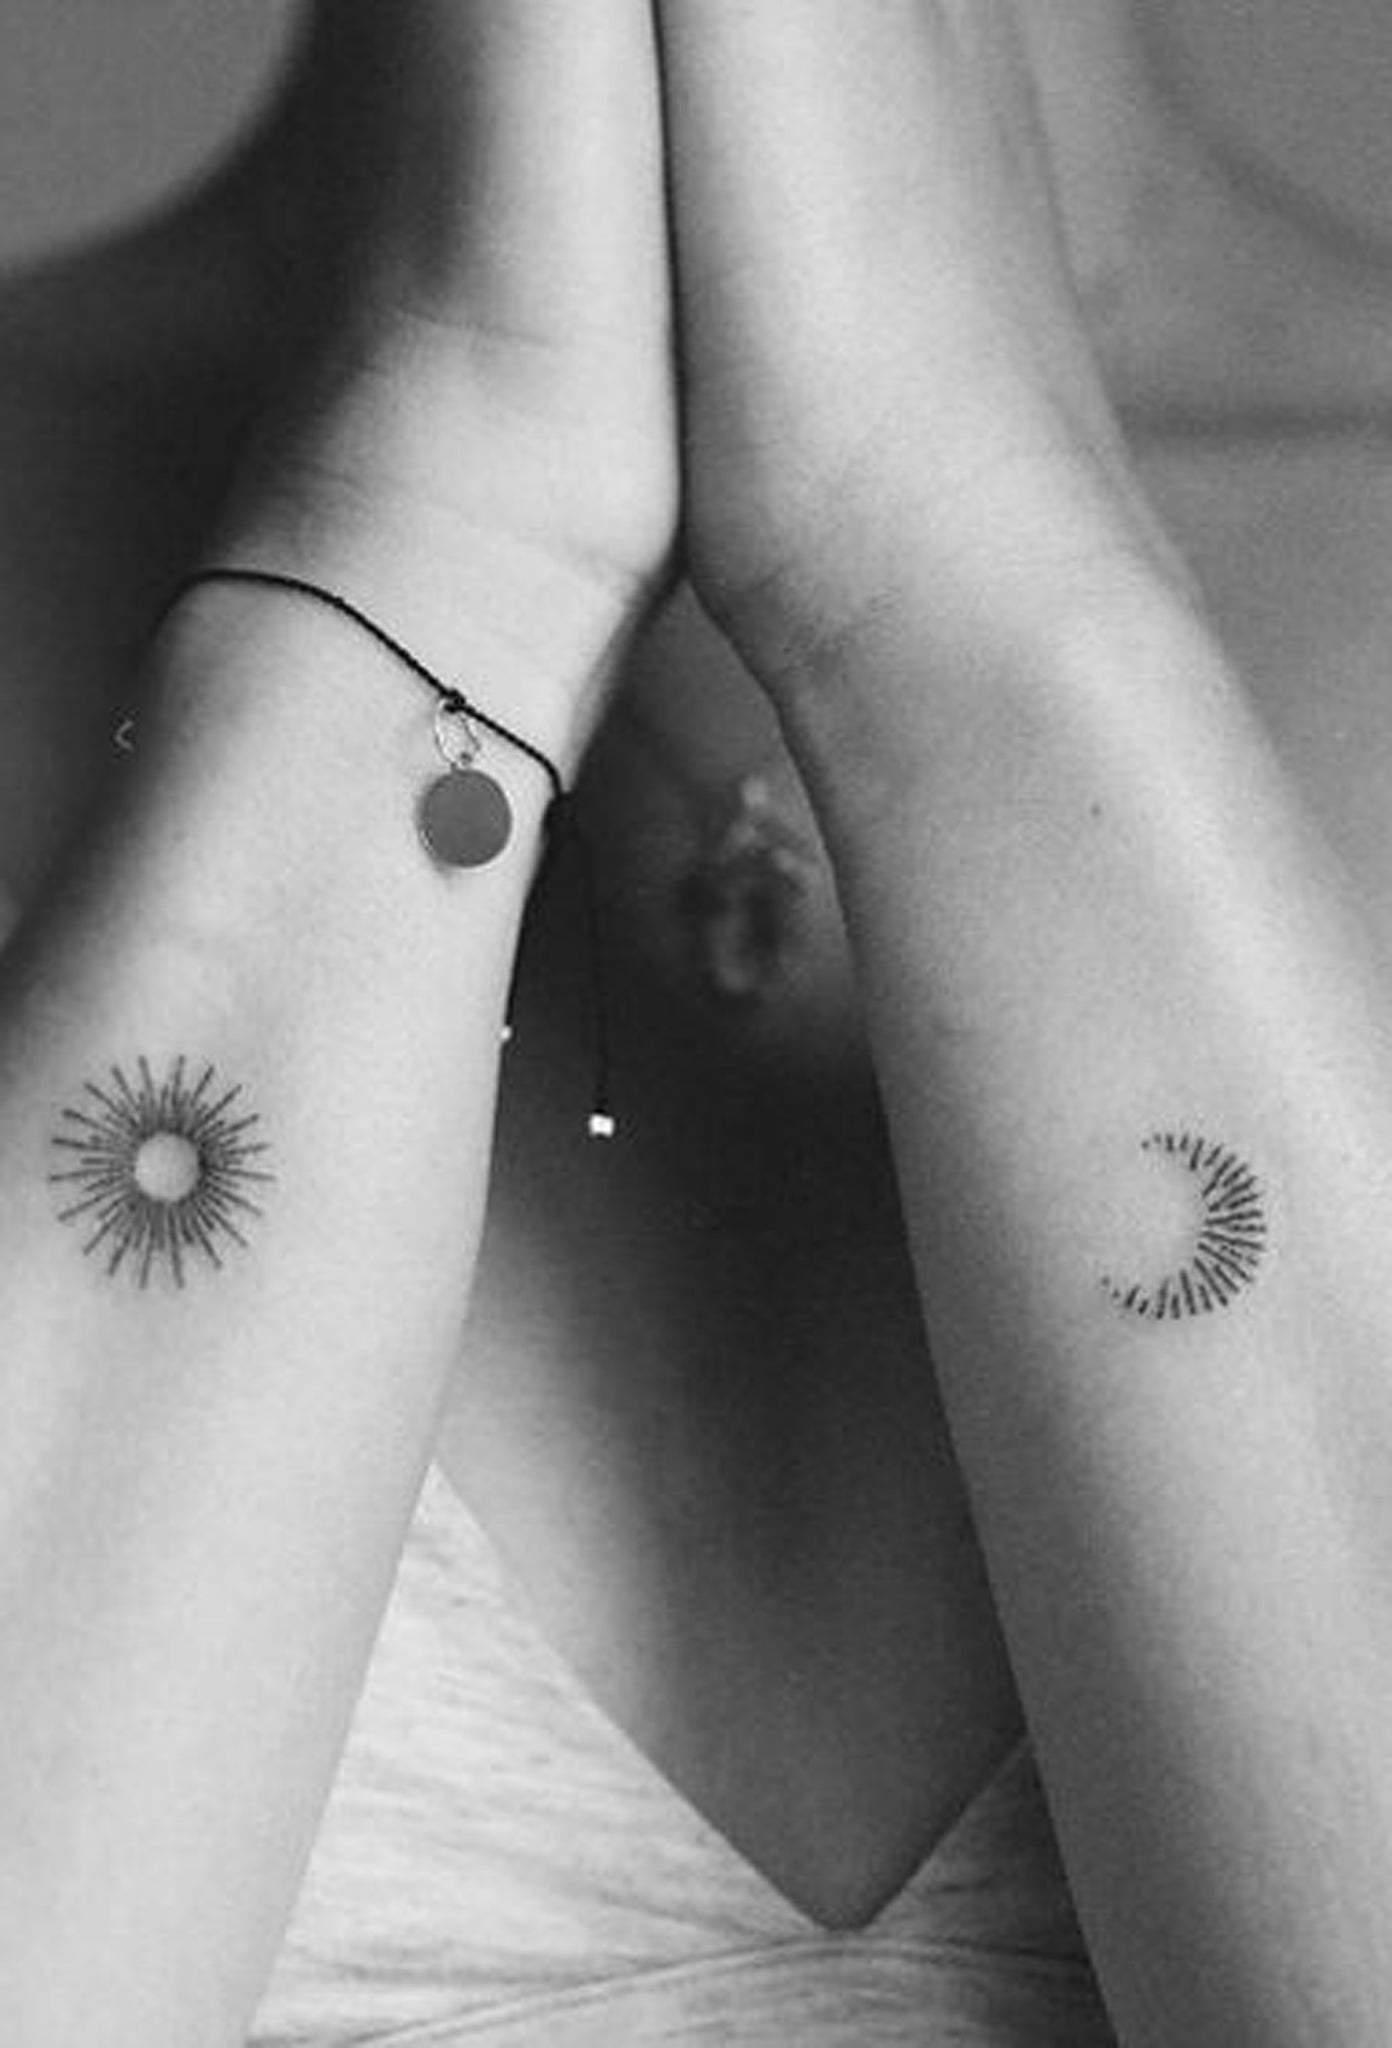 Minimal Wrist Tattoo Ideas for Teen Girls - Small Tiny Simple Minimalistic Sun and Moon Tat -  Ideas mínimas del tatuaje de la muñeca para las muchachas adolescentes - www.MyBodiArt.com